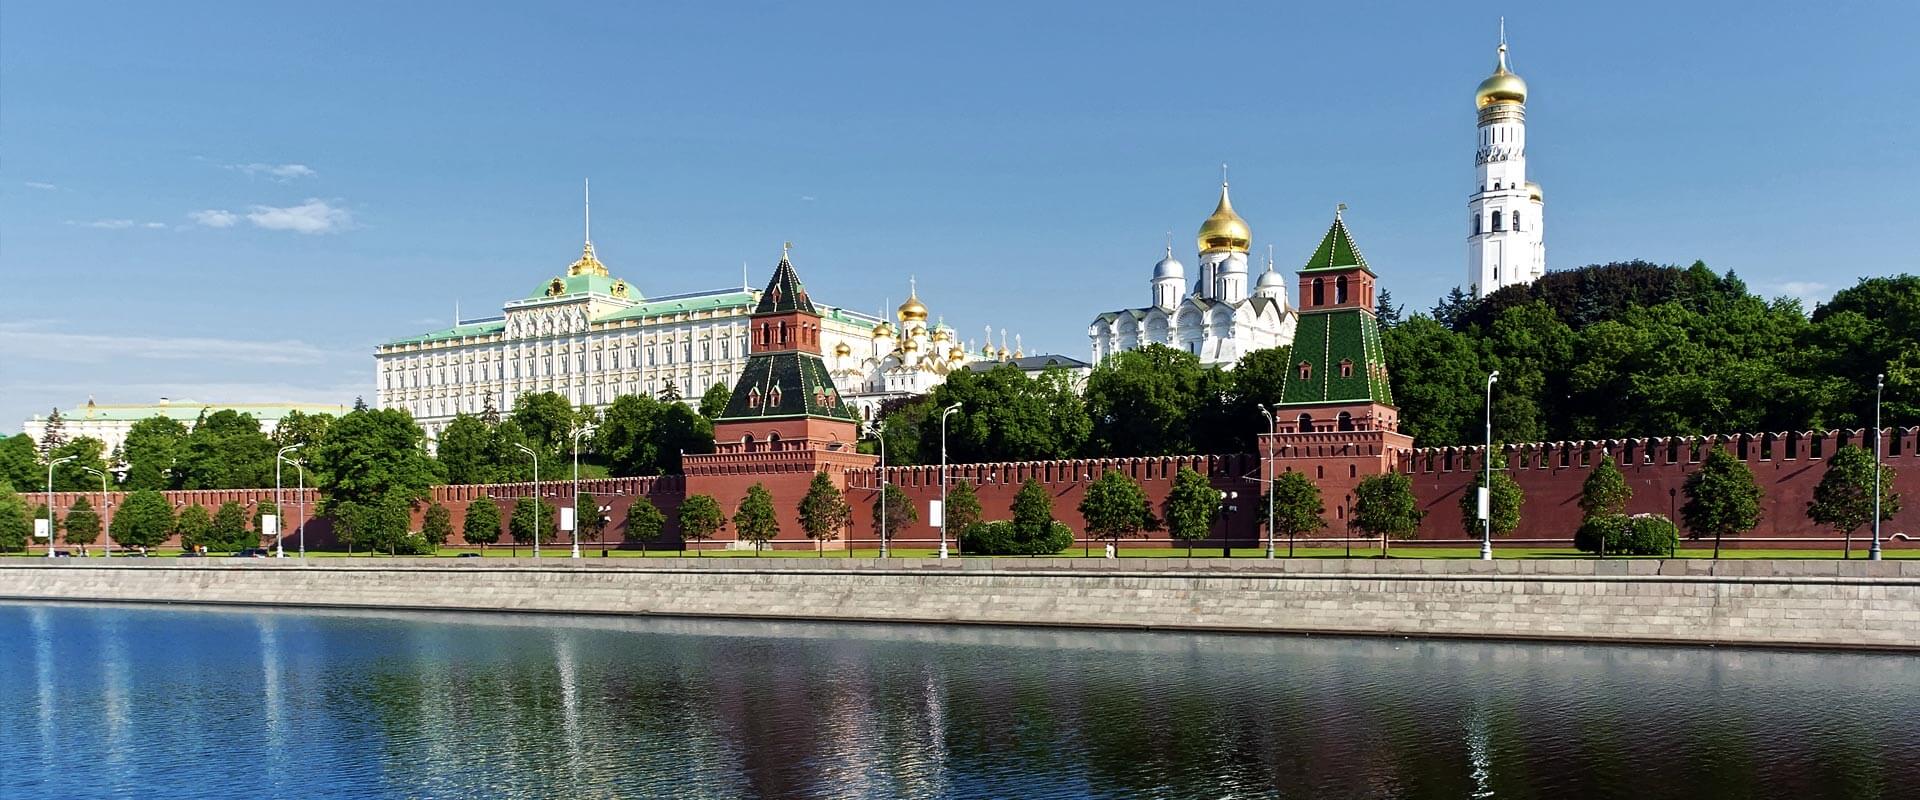 Moscow Kremlin #19